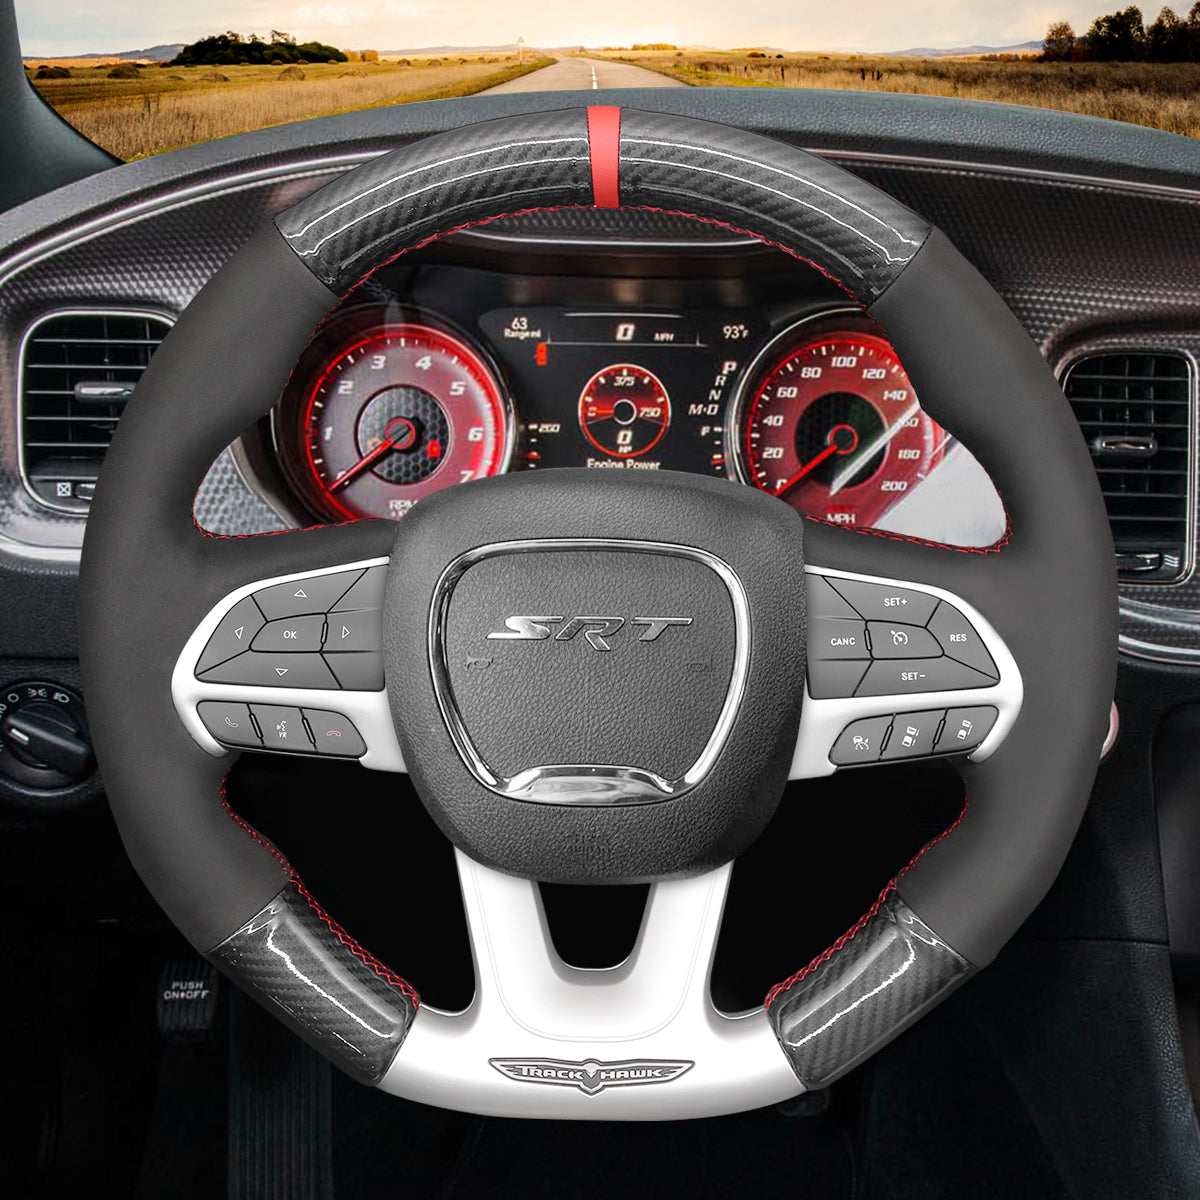 MEWANT Leather Suede Carbon Fiber Car Steering Wheel Cover for Dodge (SRT) Challenger Dodge Charger Durango